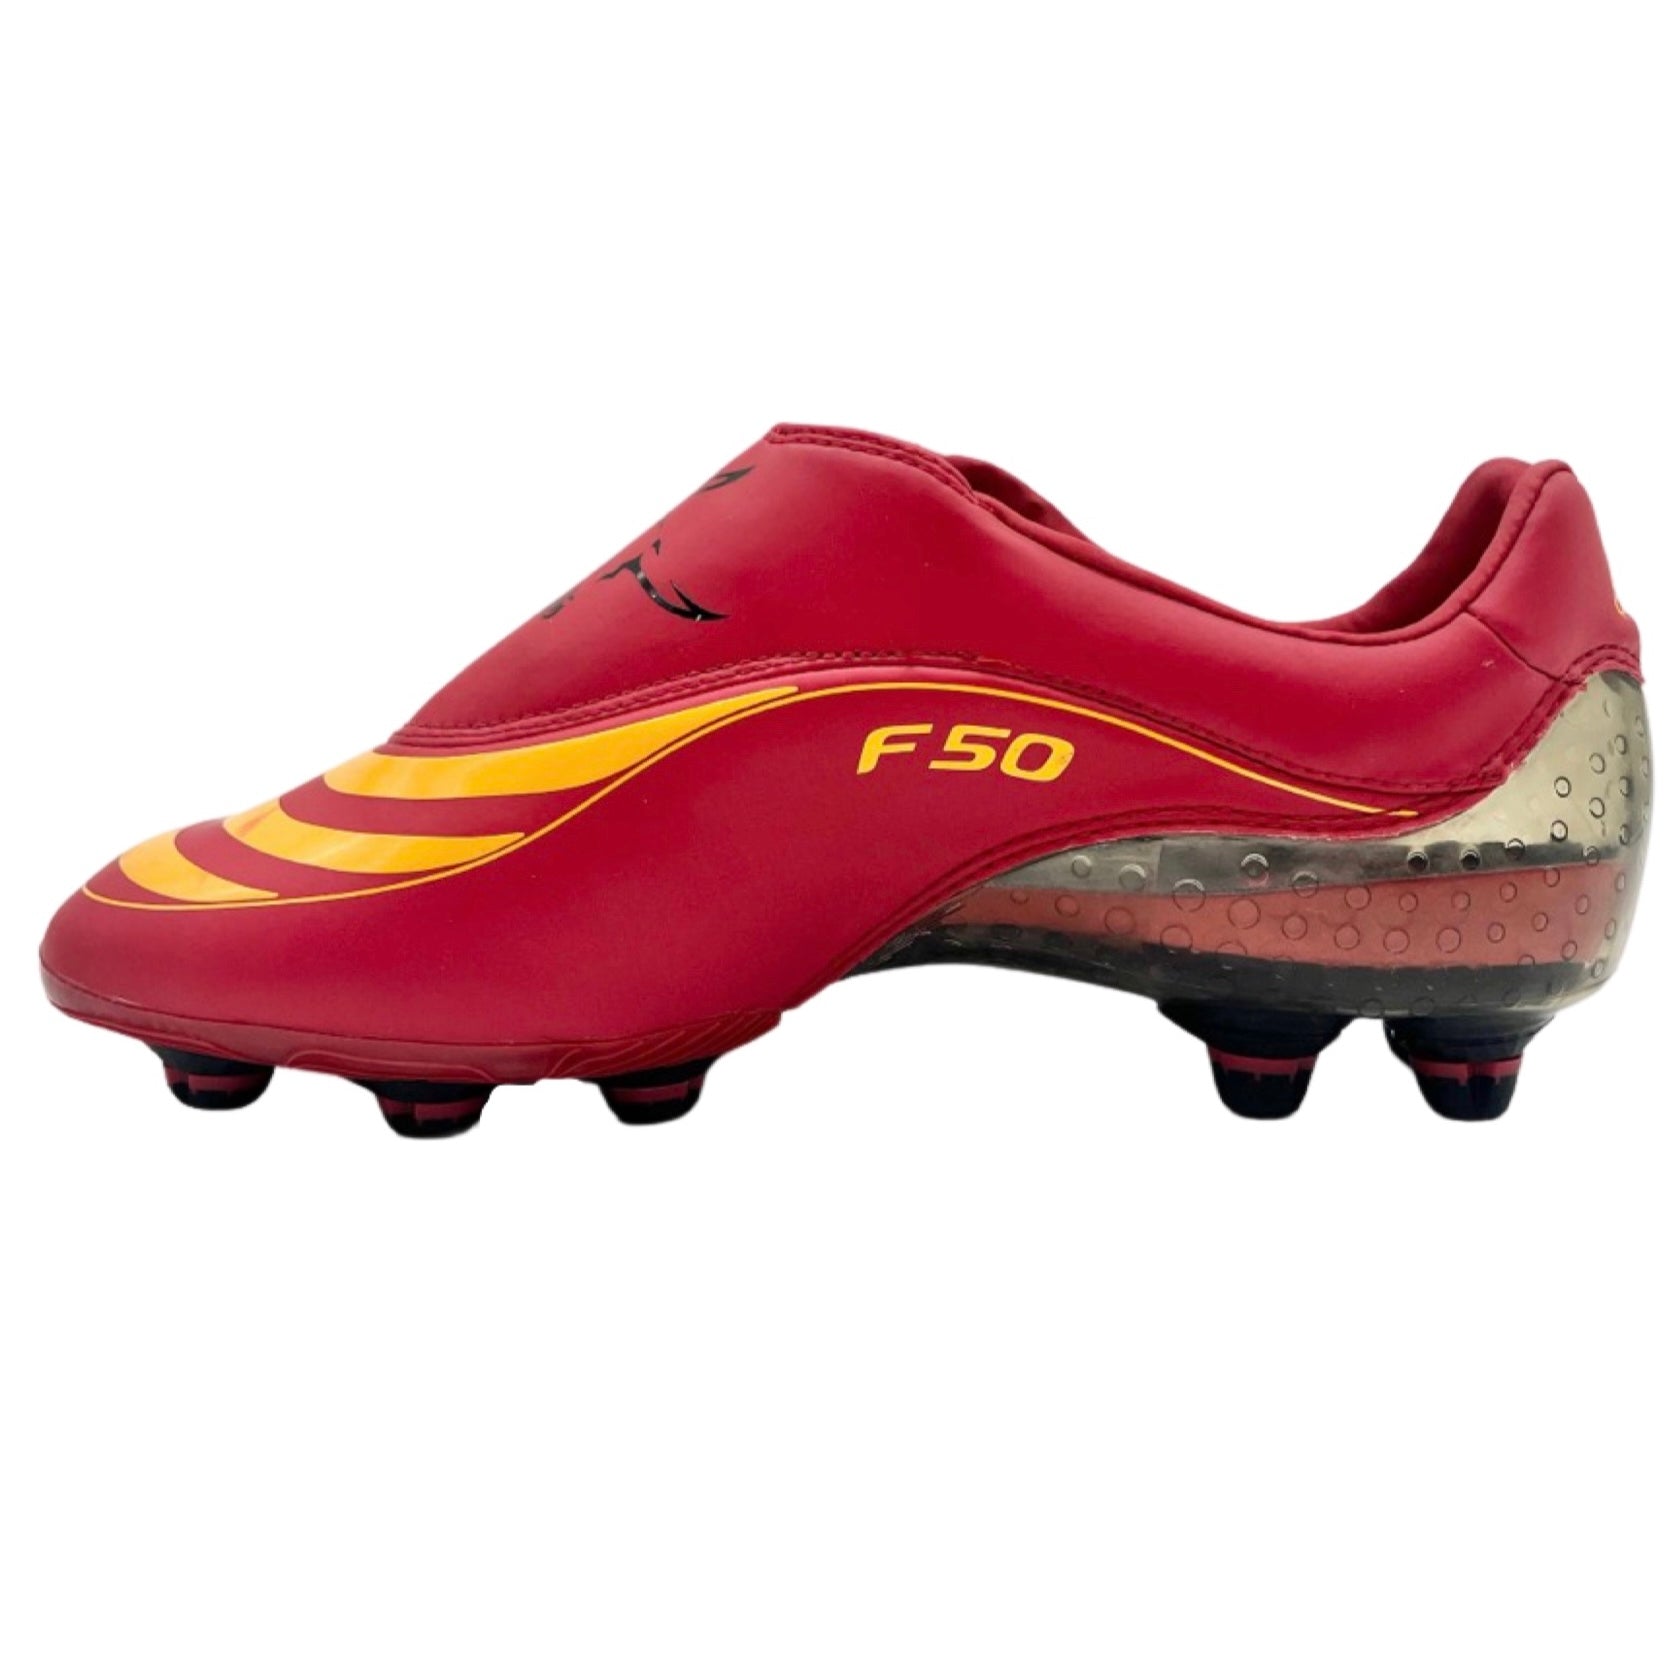 La base de datos Innecesario mezcla David Villa Match Issued Adidas F50.8 Tunit UEFA Euro 2008 – BC Boots UK